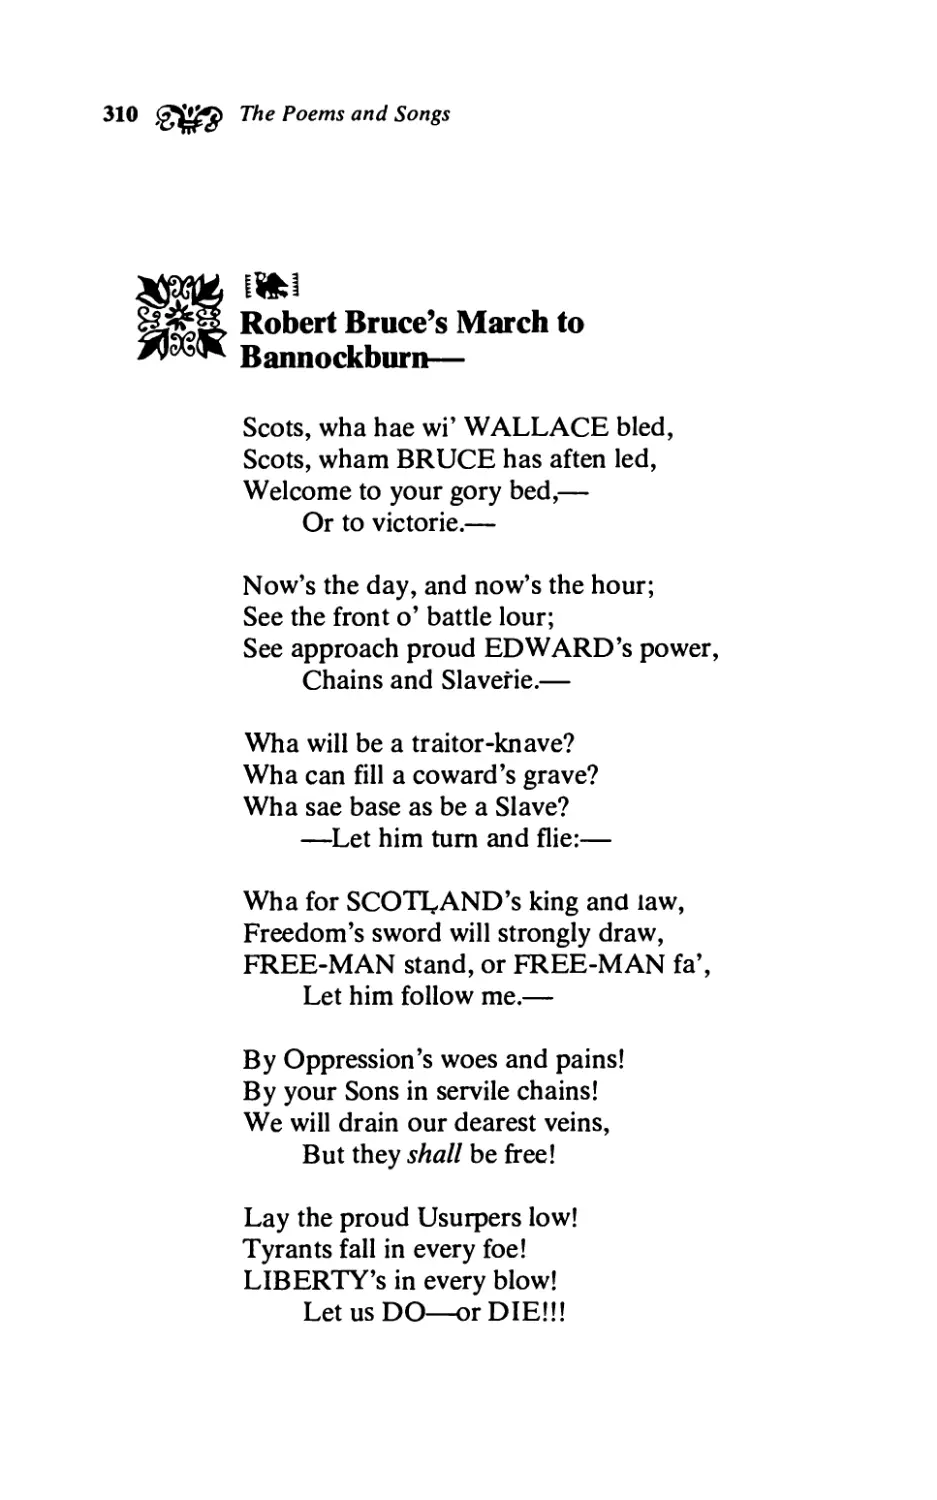 Robert Bruce’s March to Bannockburn-